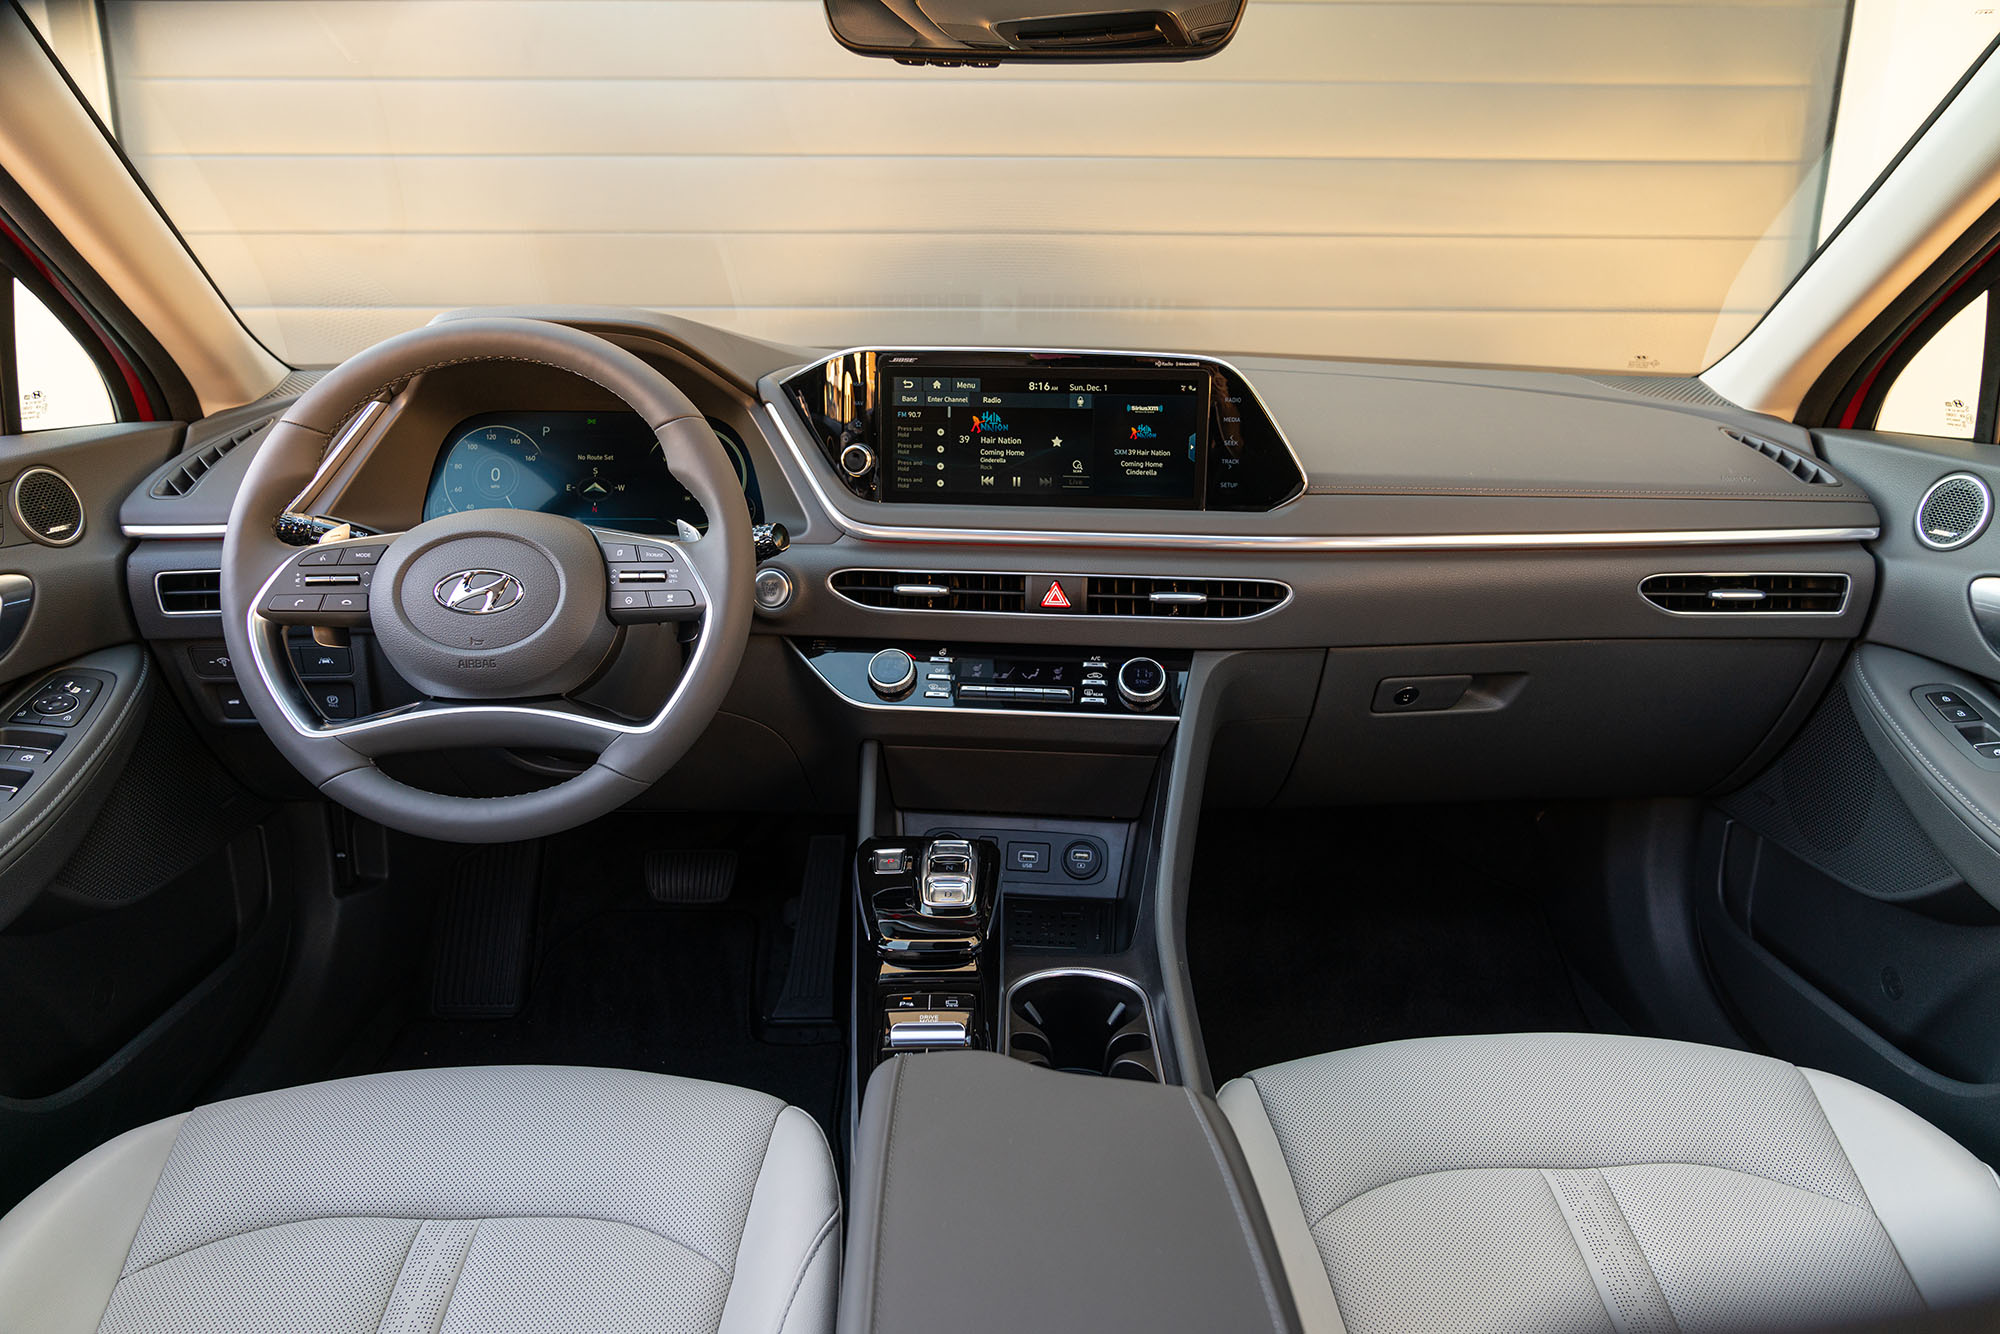 2023 Hyundai Sonata interior in gray